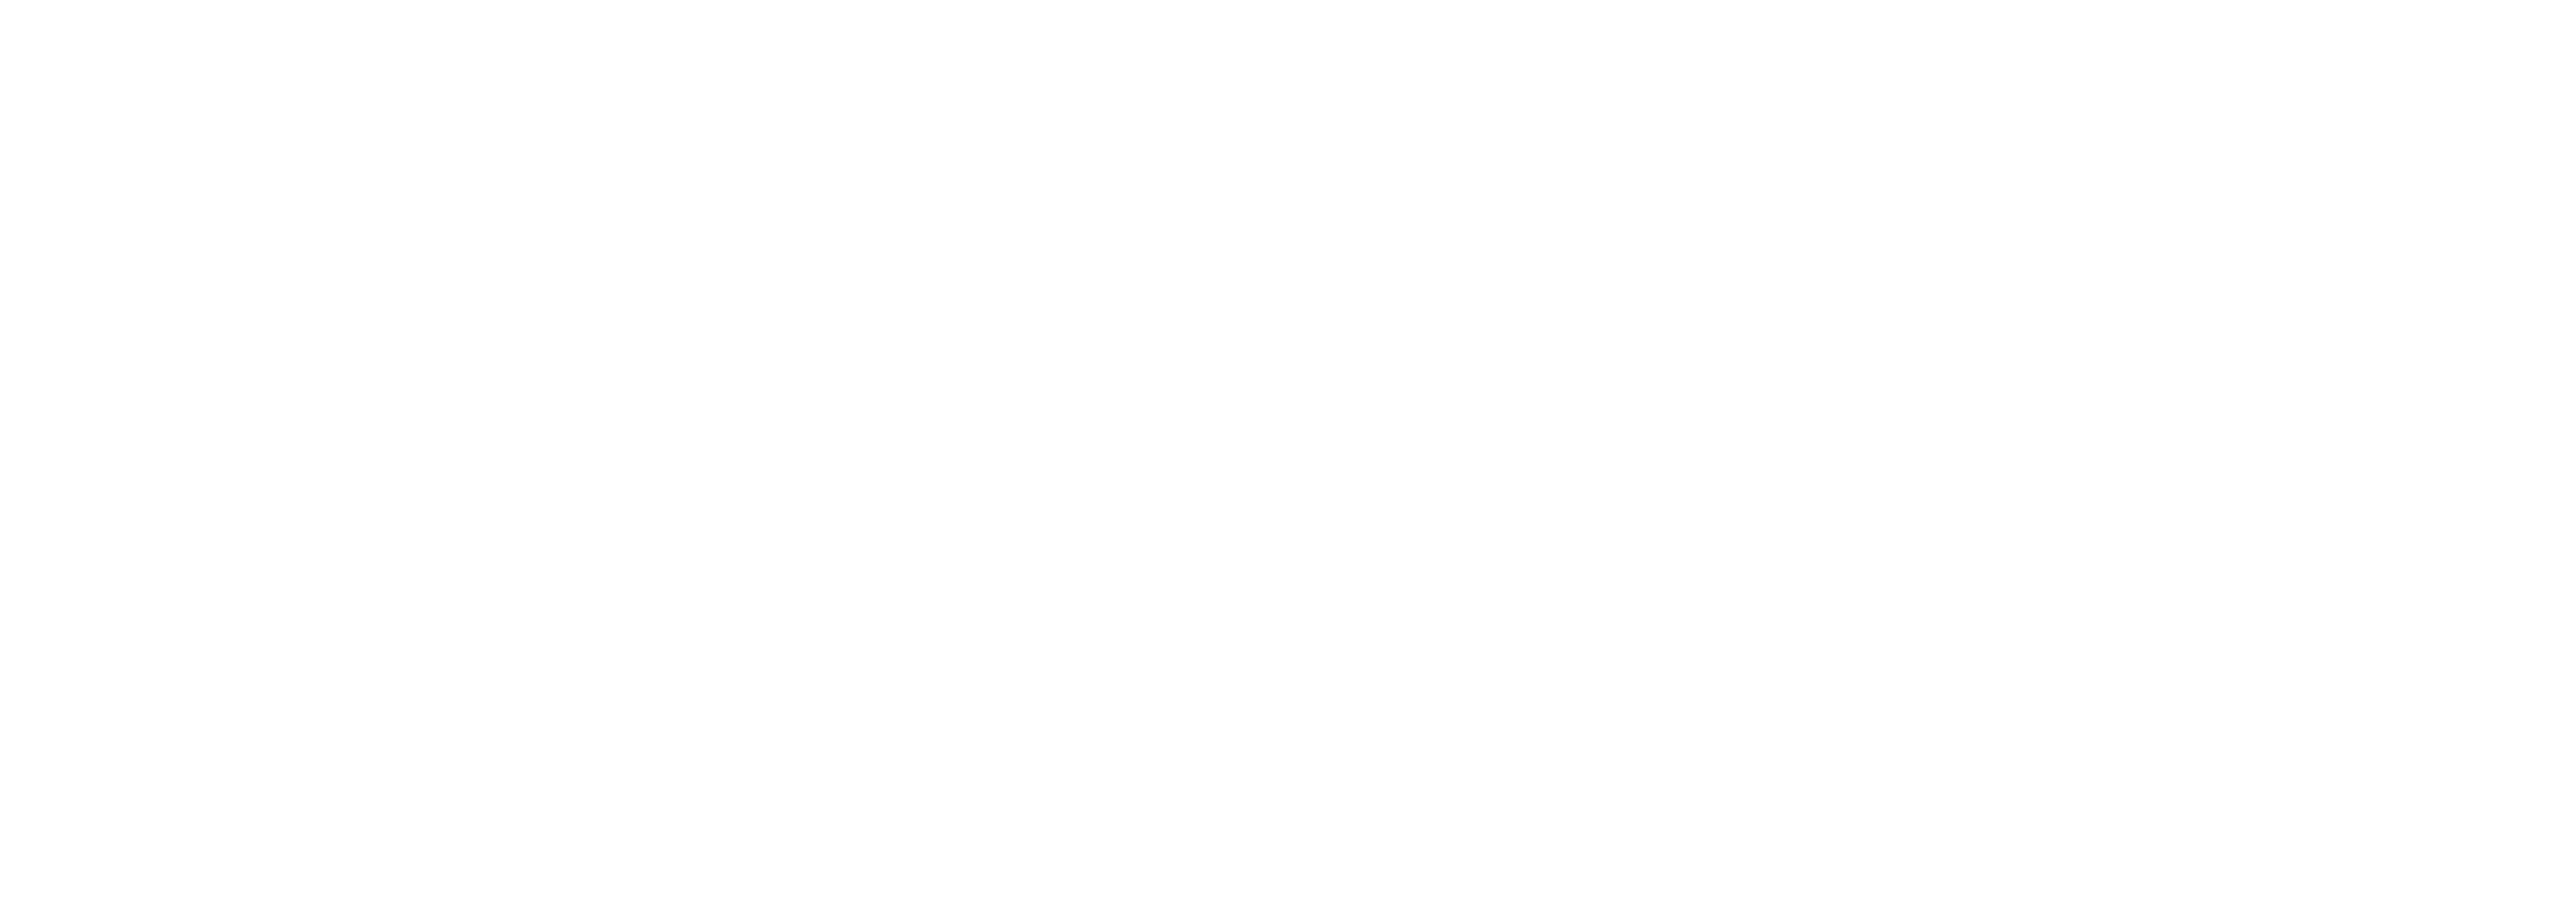 Casel